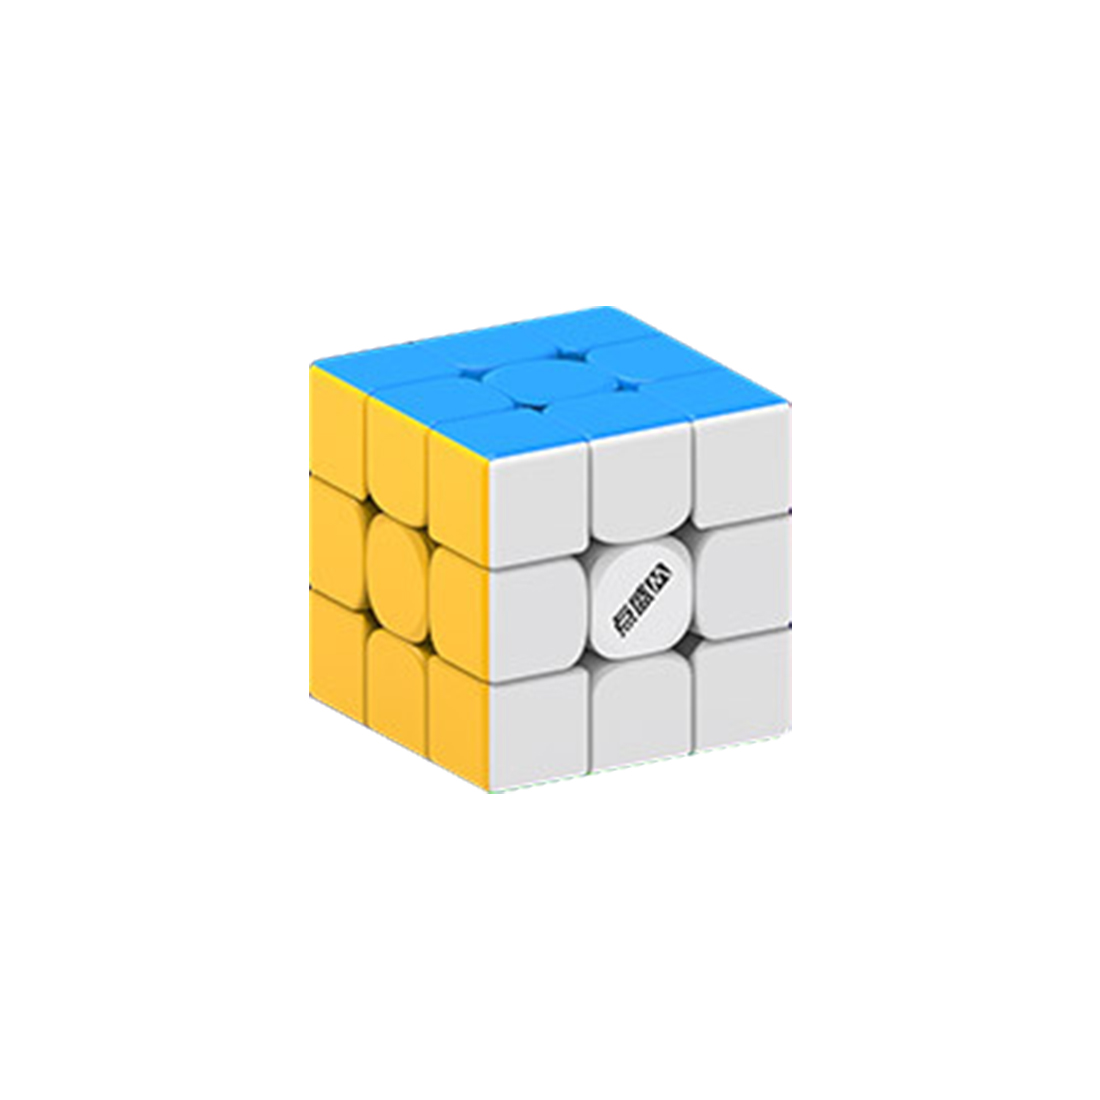 DianSheng M 3x3 Magic Cube (Stickerless)